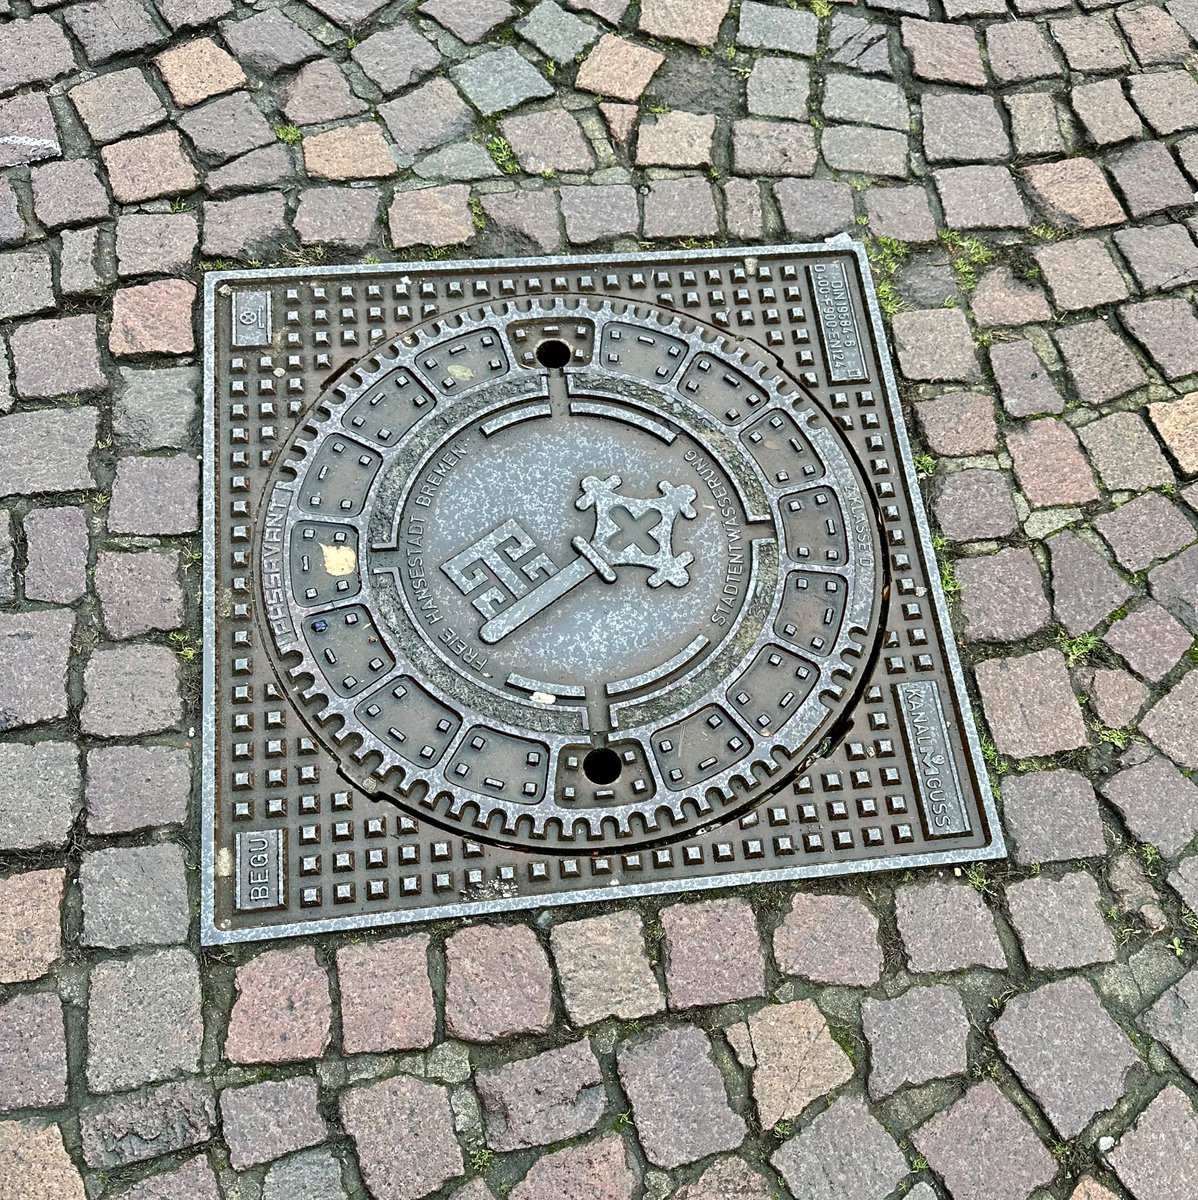 #ManholecoverMonday Bremen